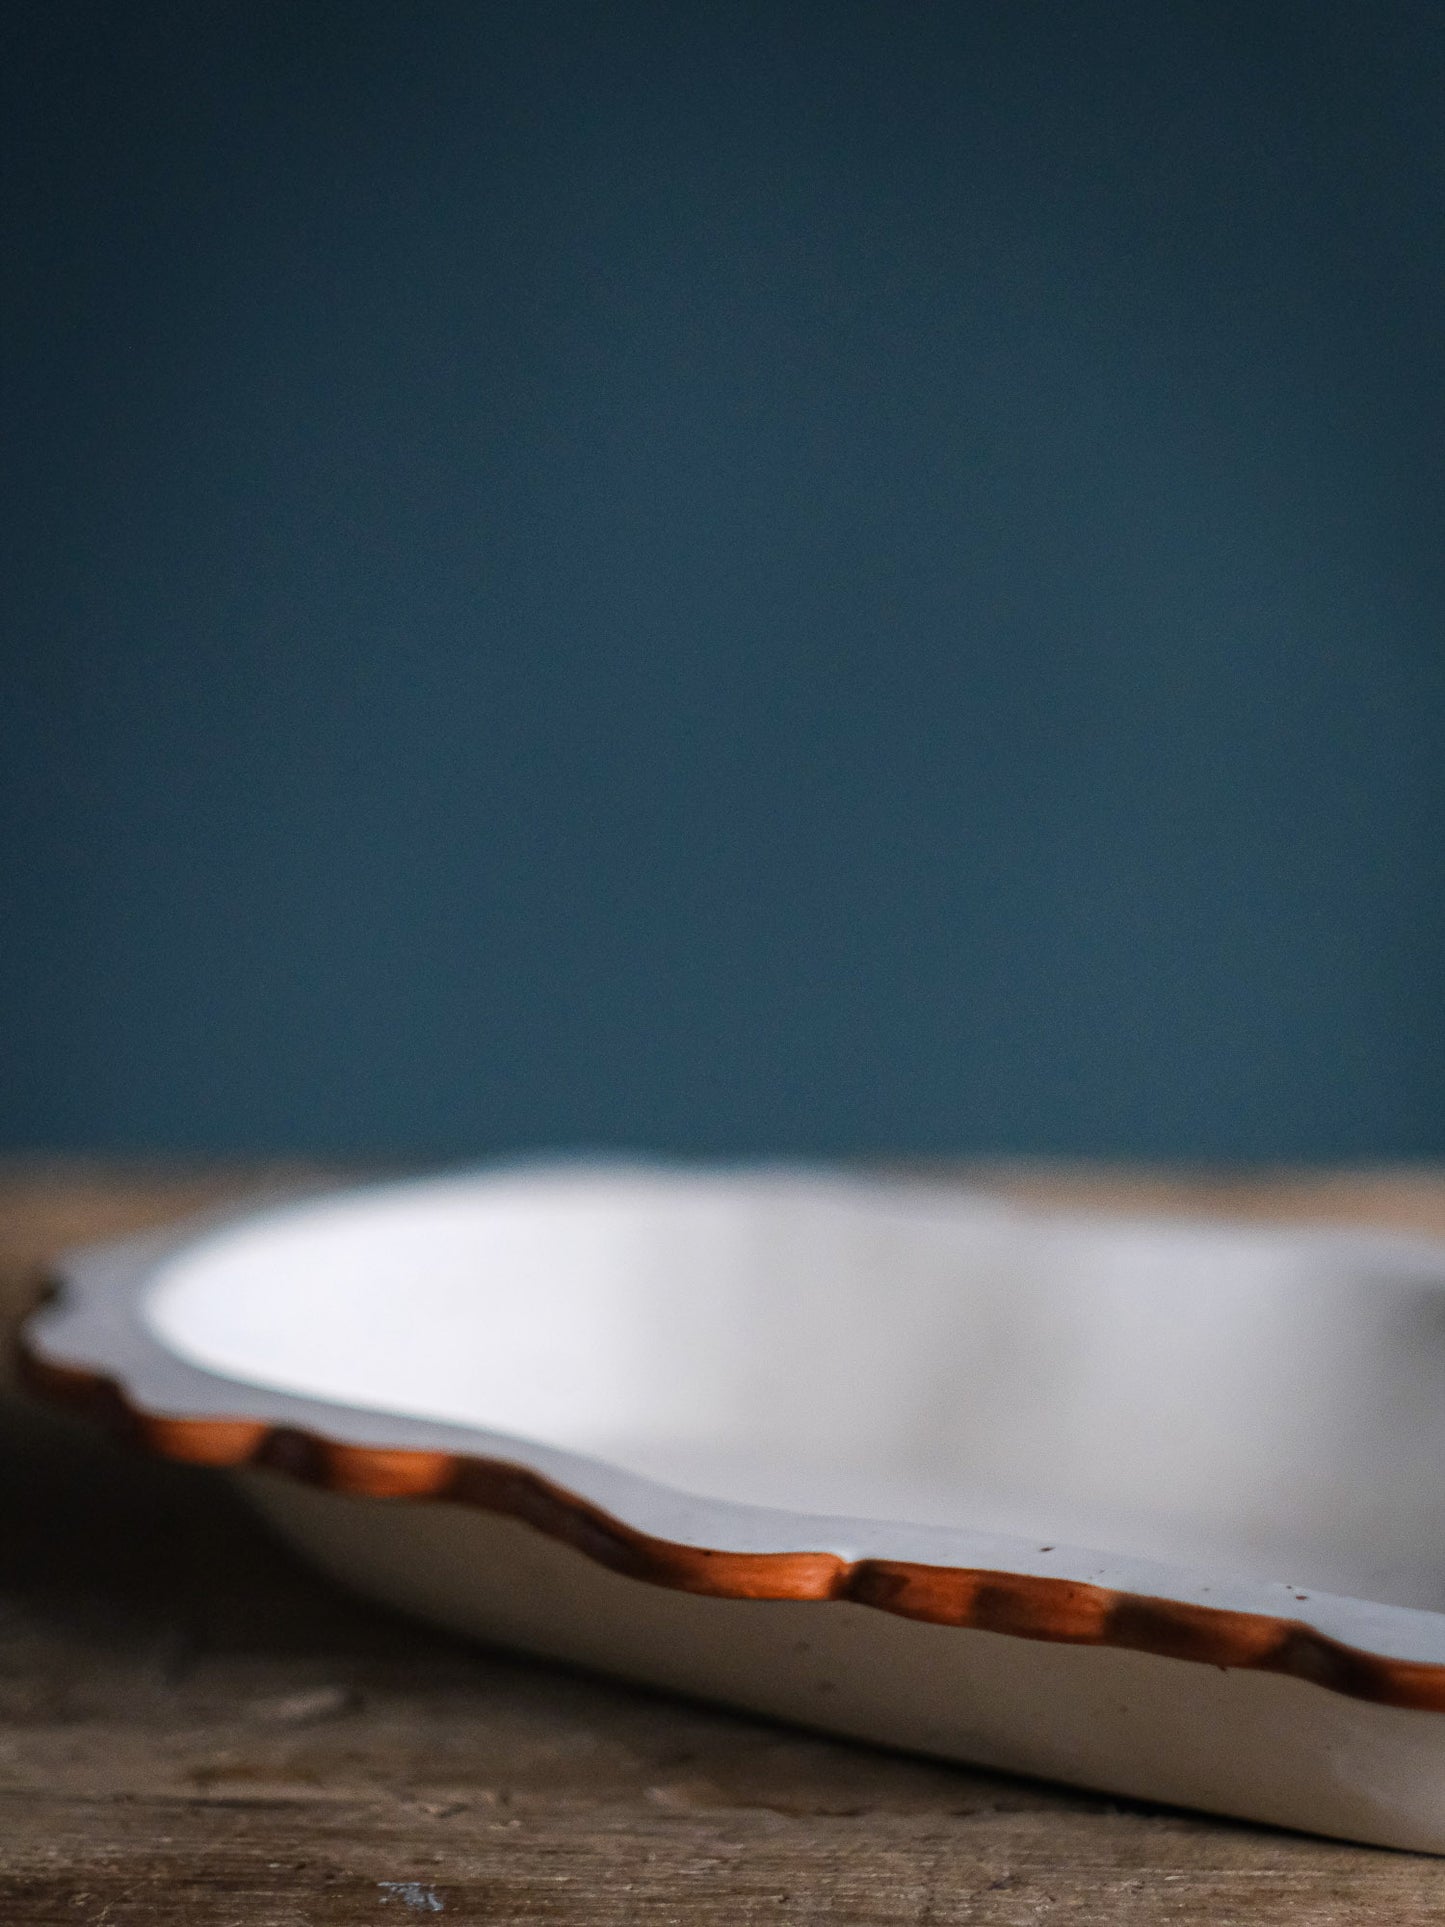 Speckled Scalloped Platter/Bowl